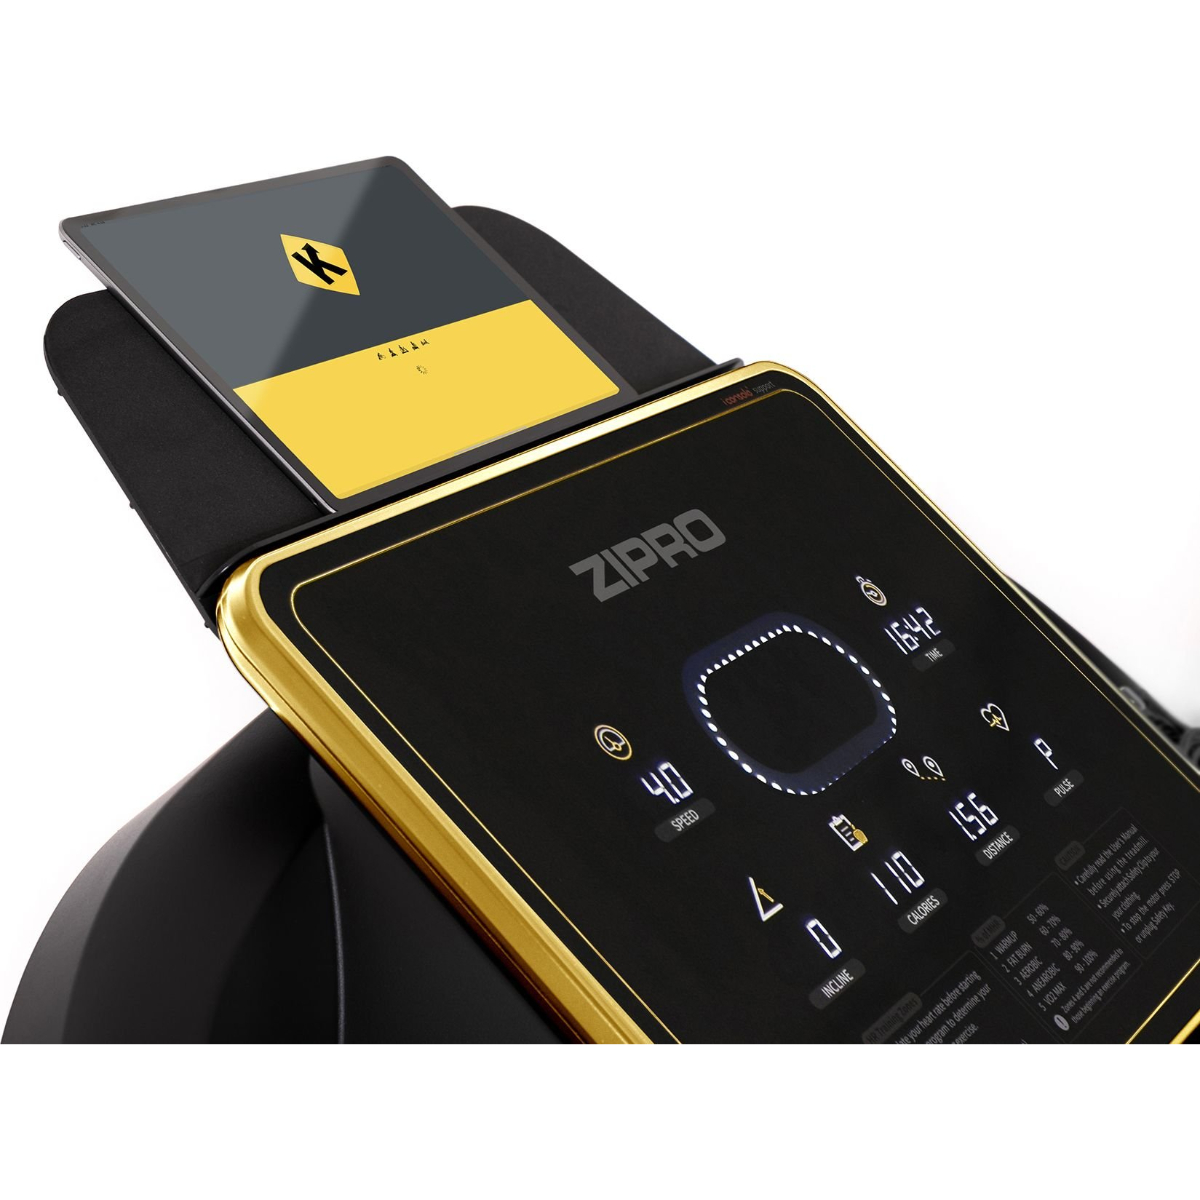 ZIPRO Pacemaker Gold iConsole+ Laufband, Schawrz